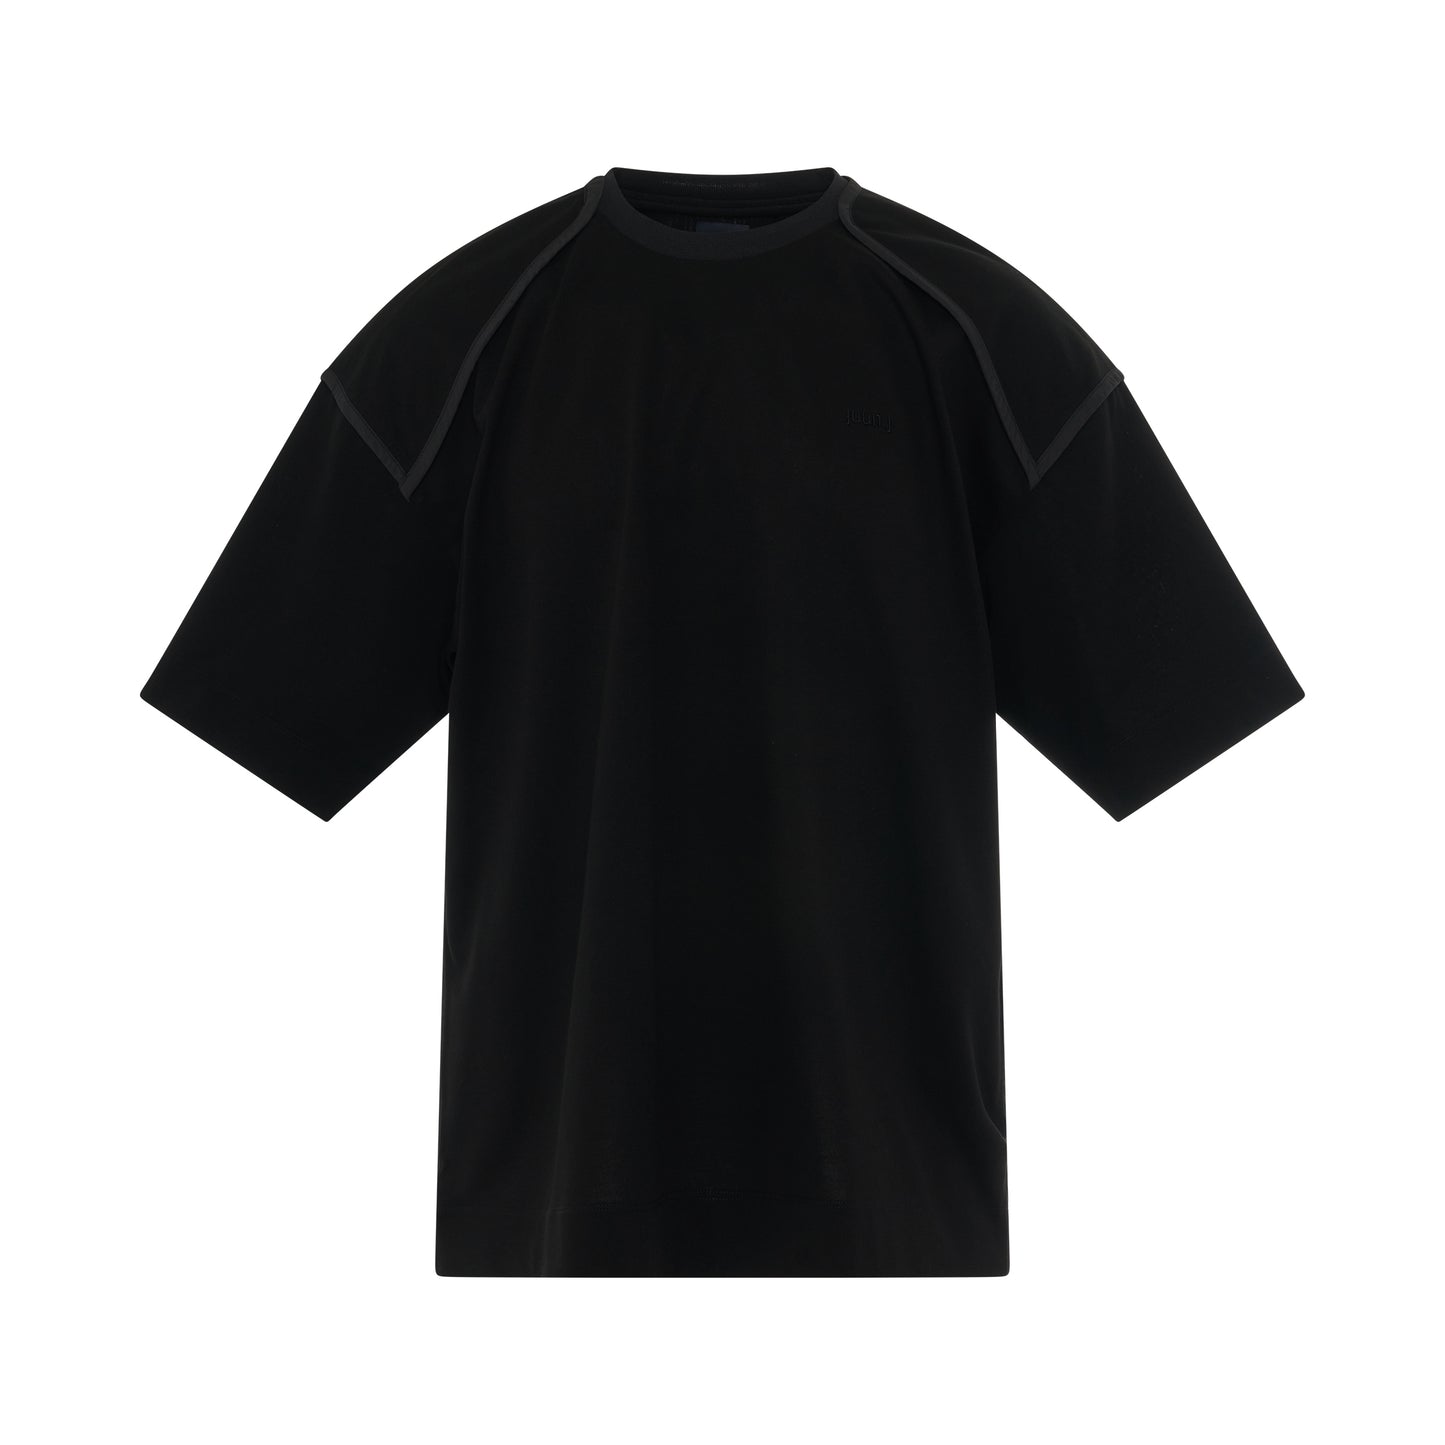 Piping Knit Collar Half Sleeve T-Shirt in Black